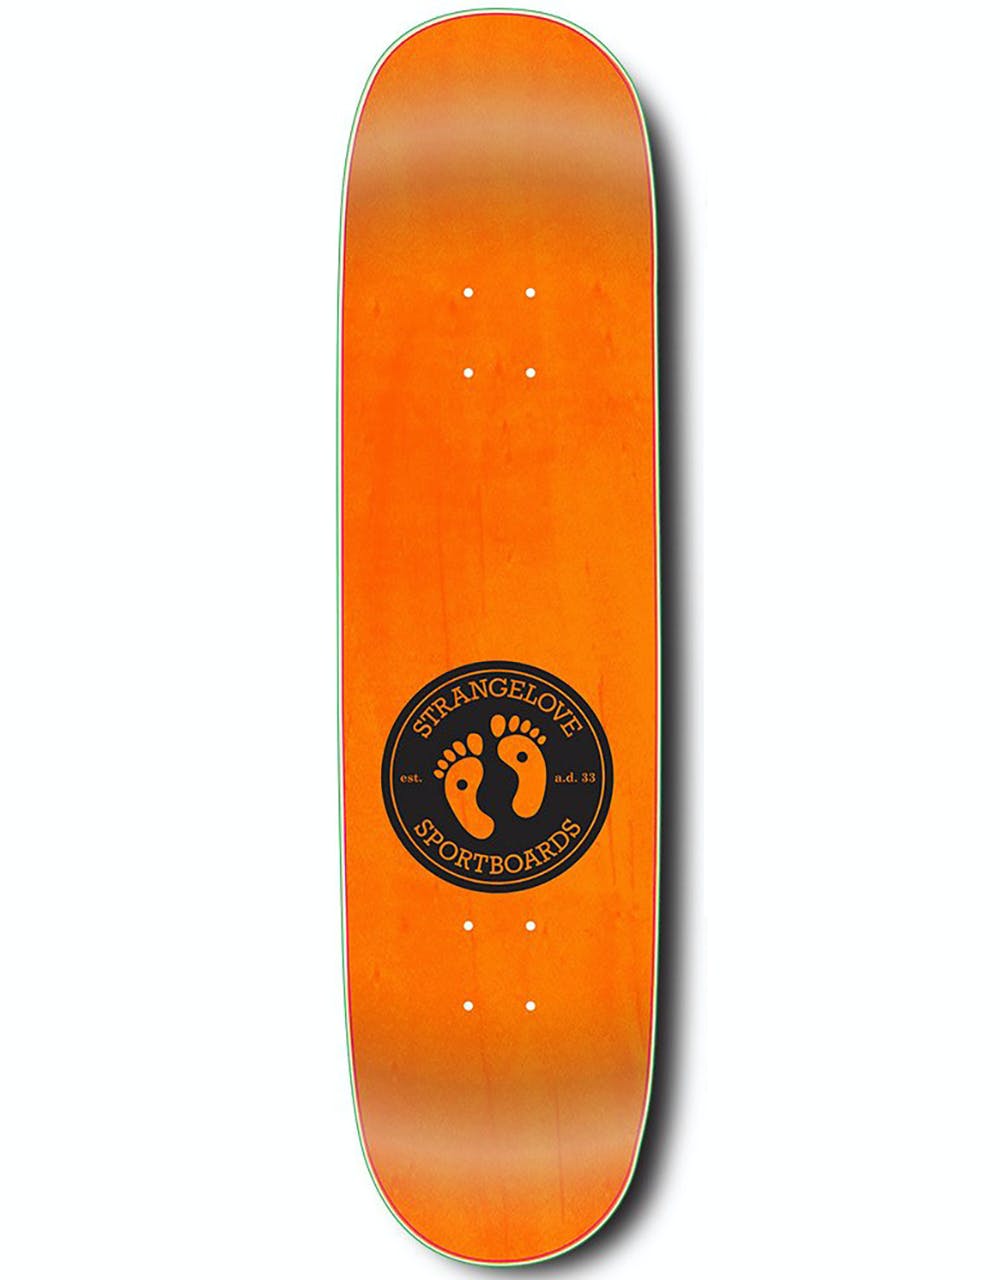 StrangeLove Holy Roller Skateboard Deck - 8.375"